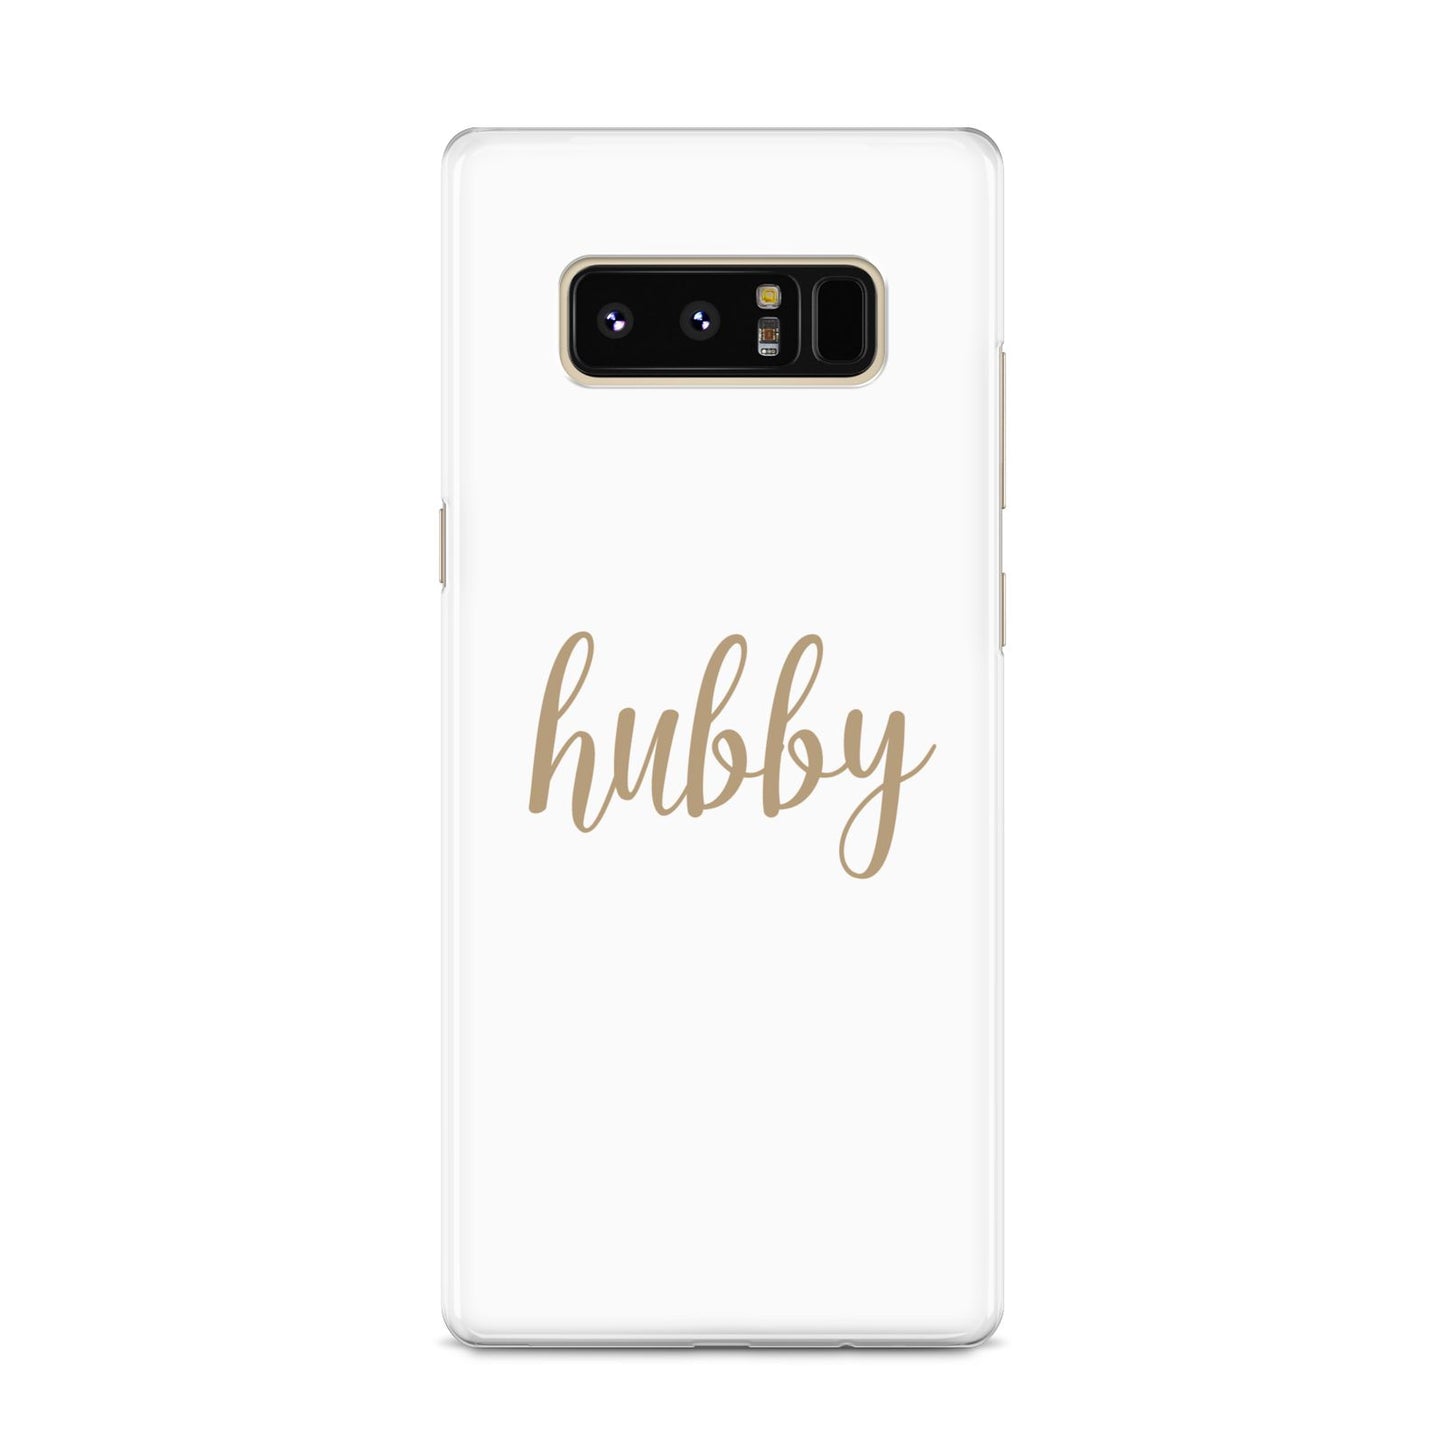 Hubby Samsung Galaxy S8 Case